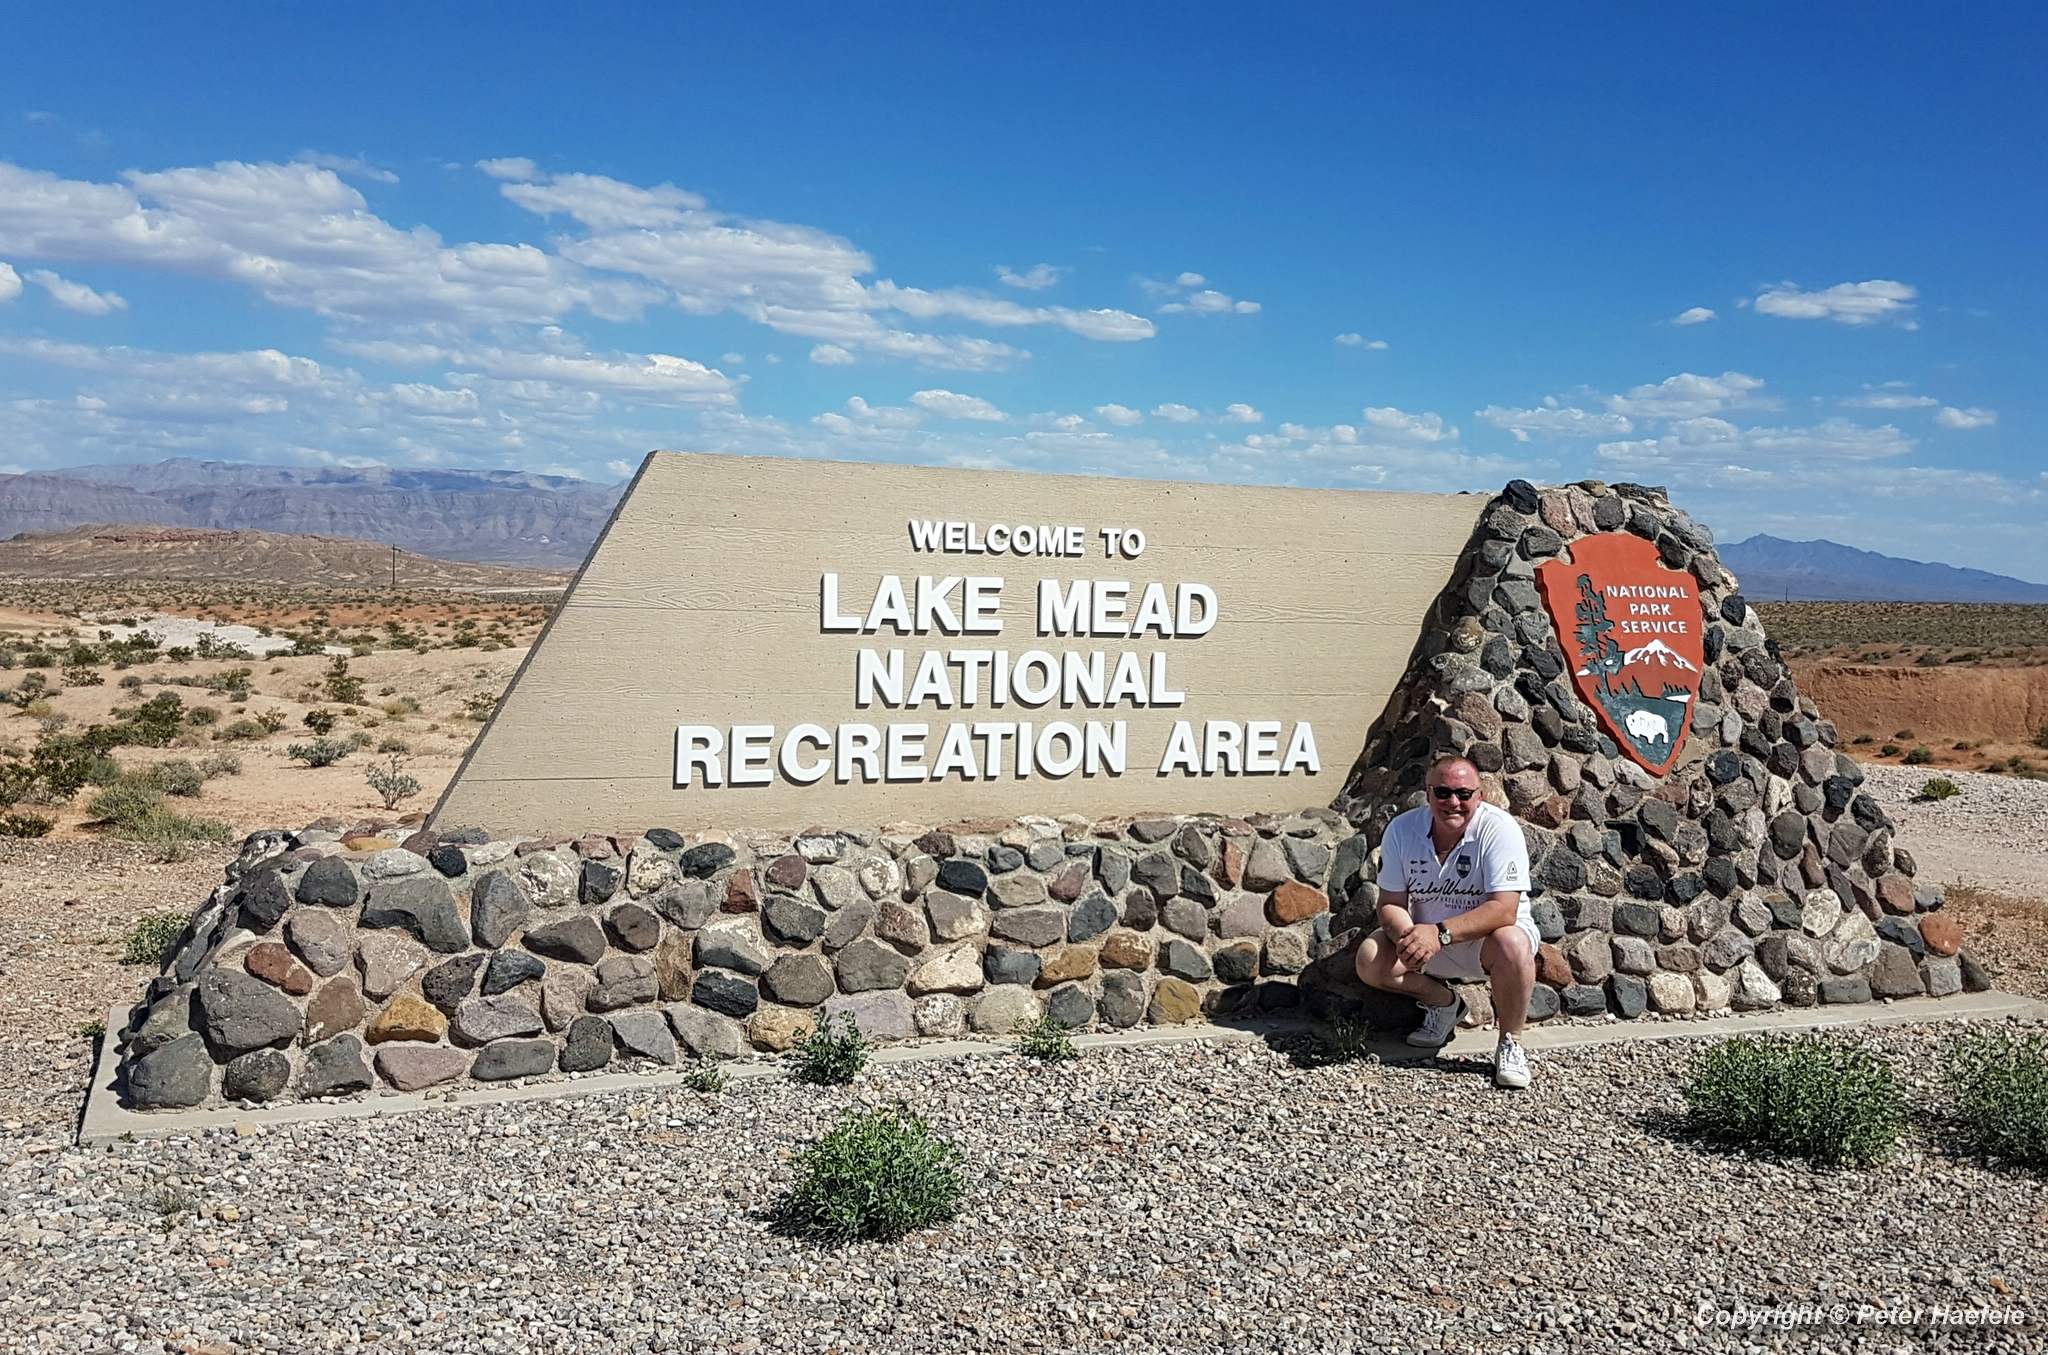 Roadtrip USA - Welcome to Lake Mead National Recreation Area - Nevada